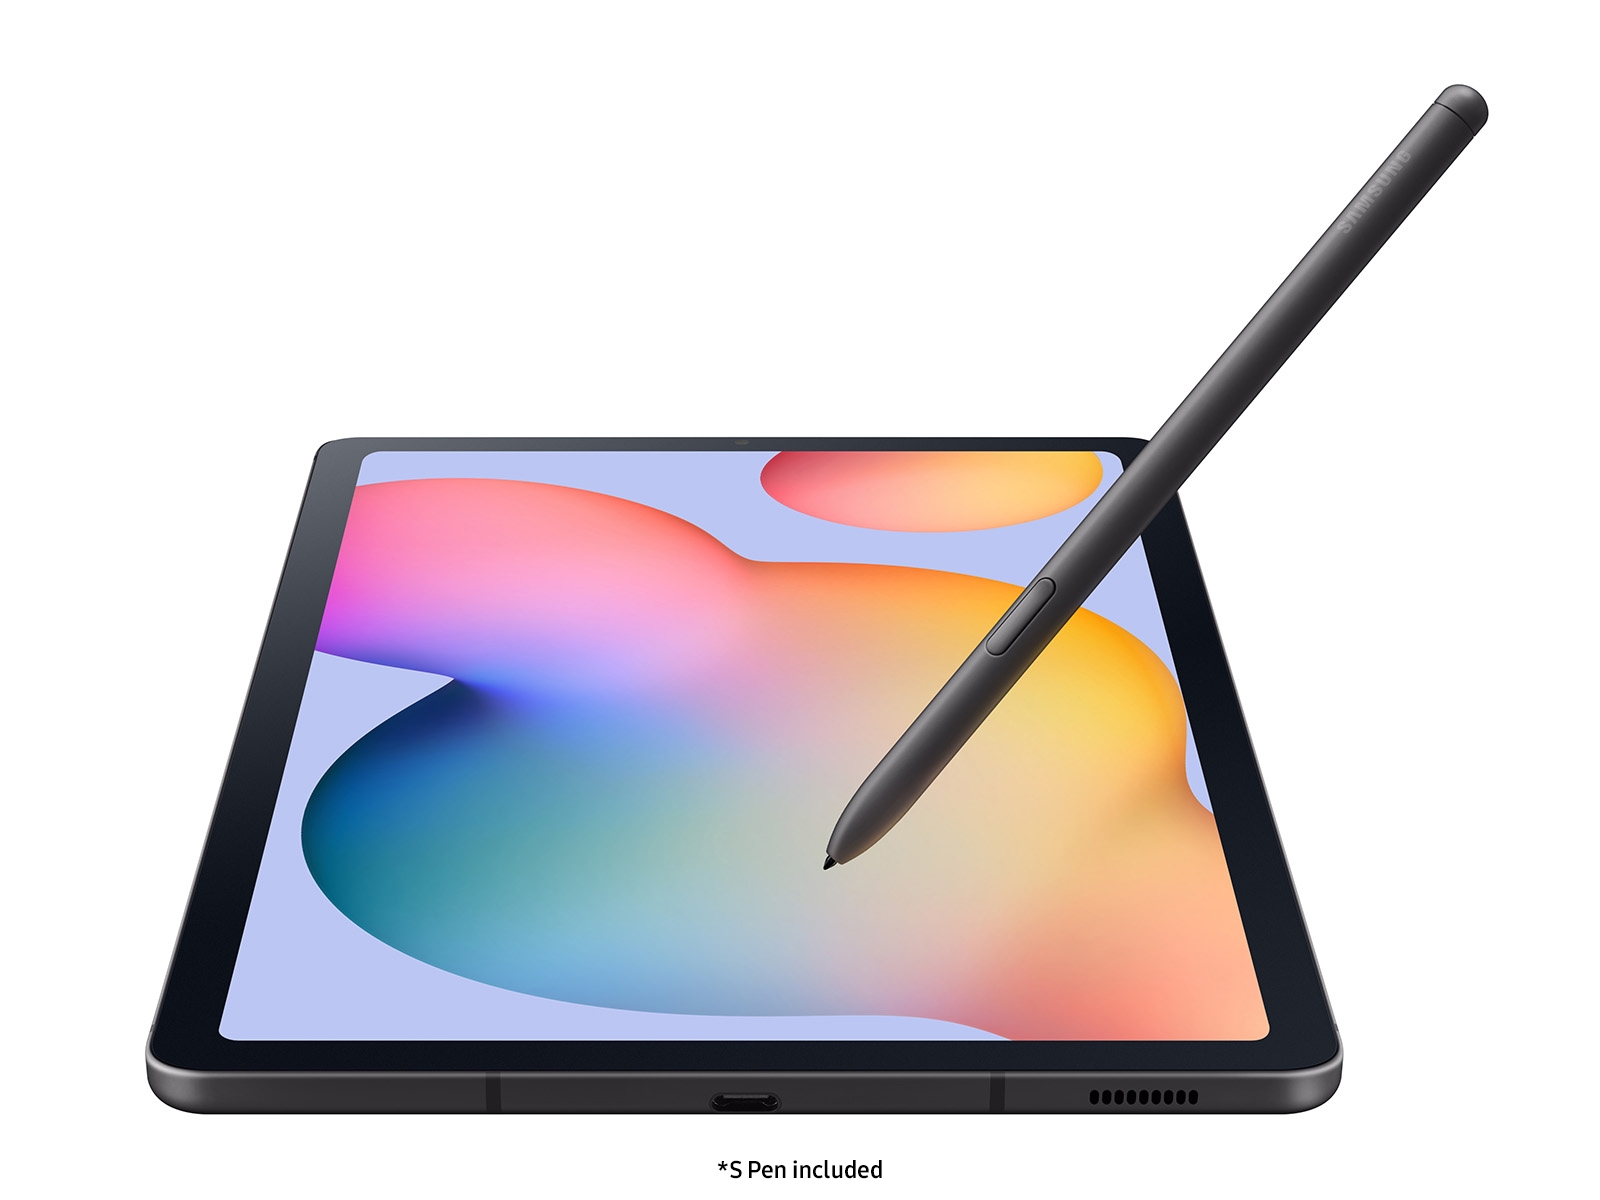 Galaxy Tab S6 Lite 64GB Oxford Gray Tablets - SM-P613NZAAXAR 